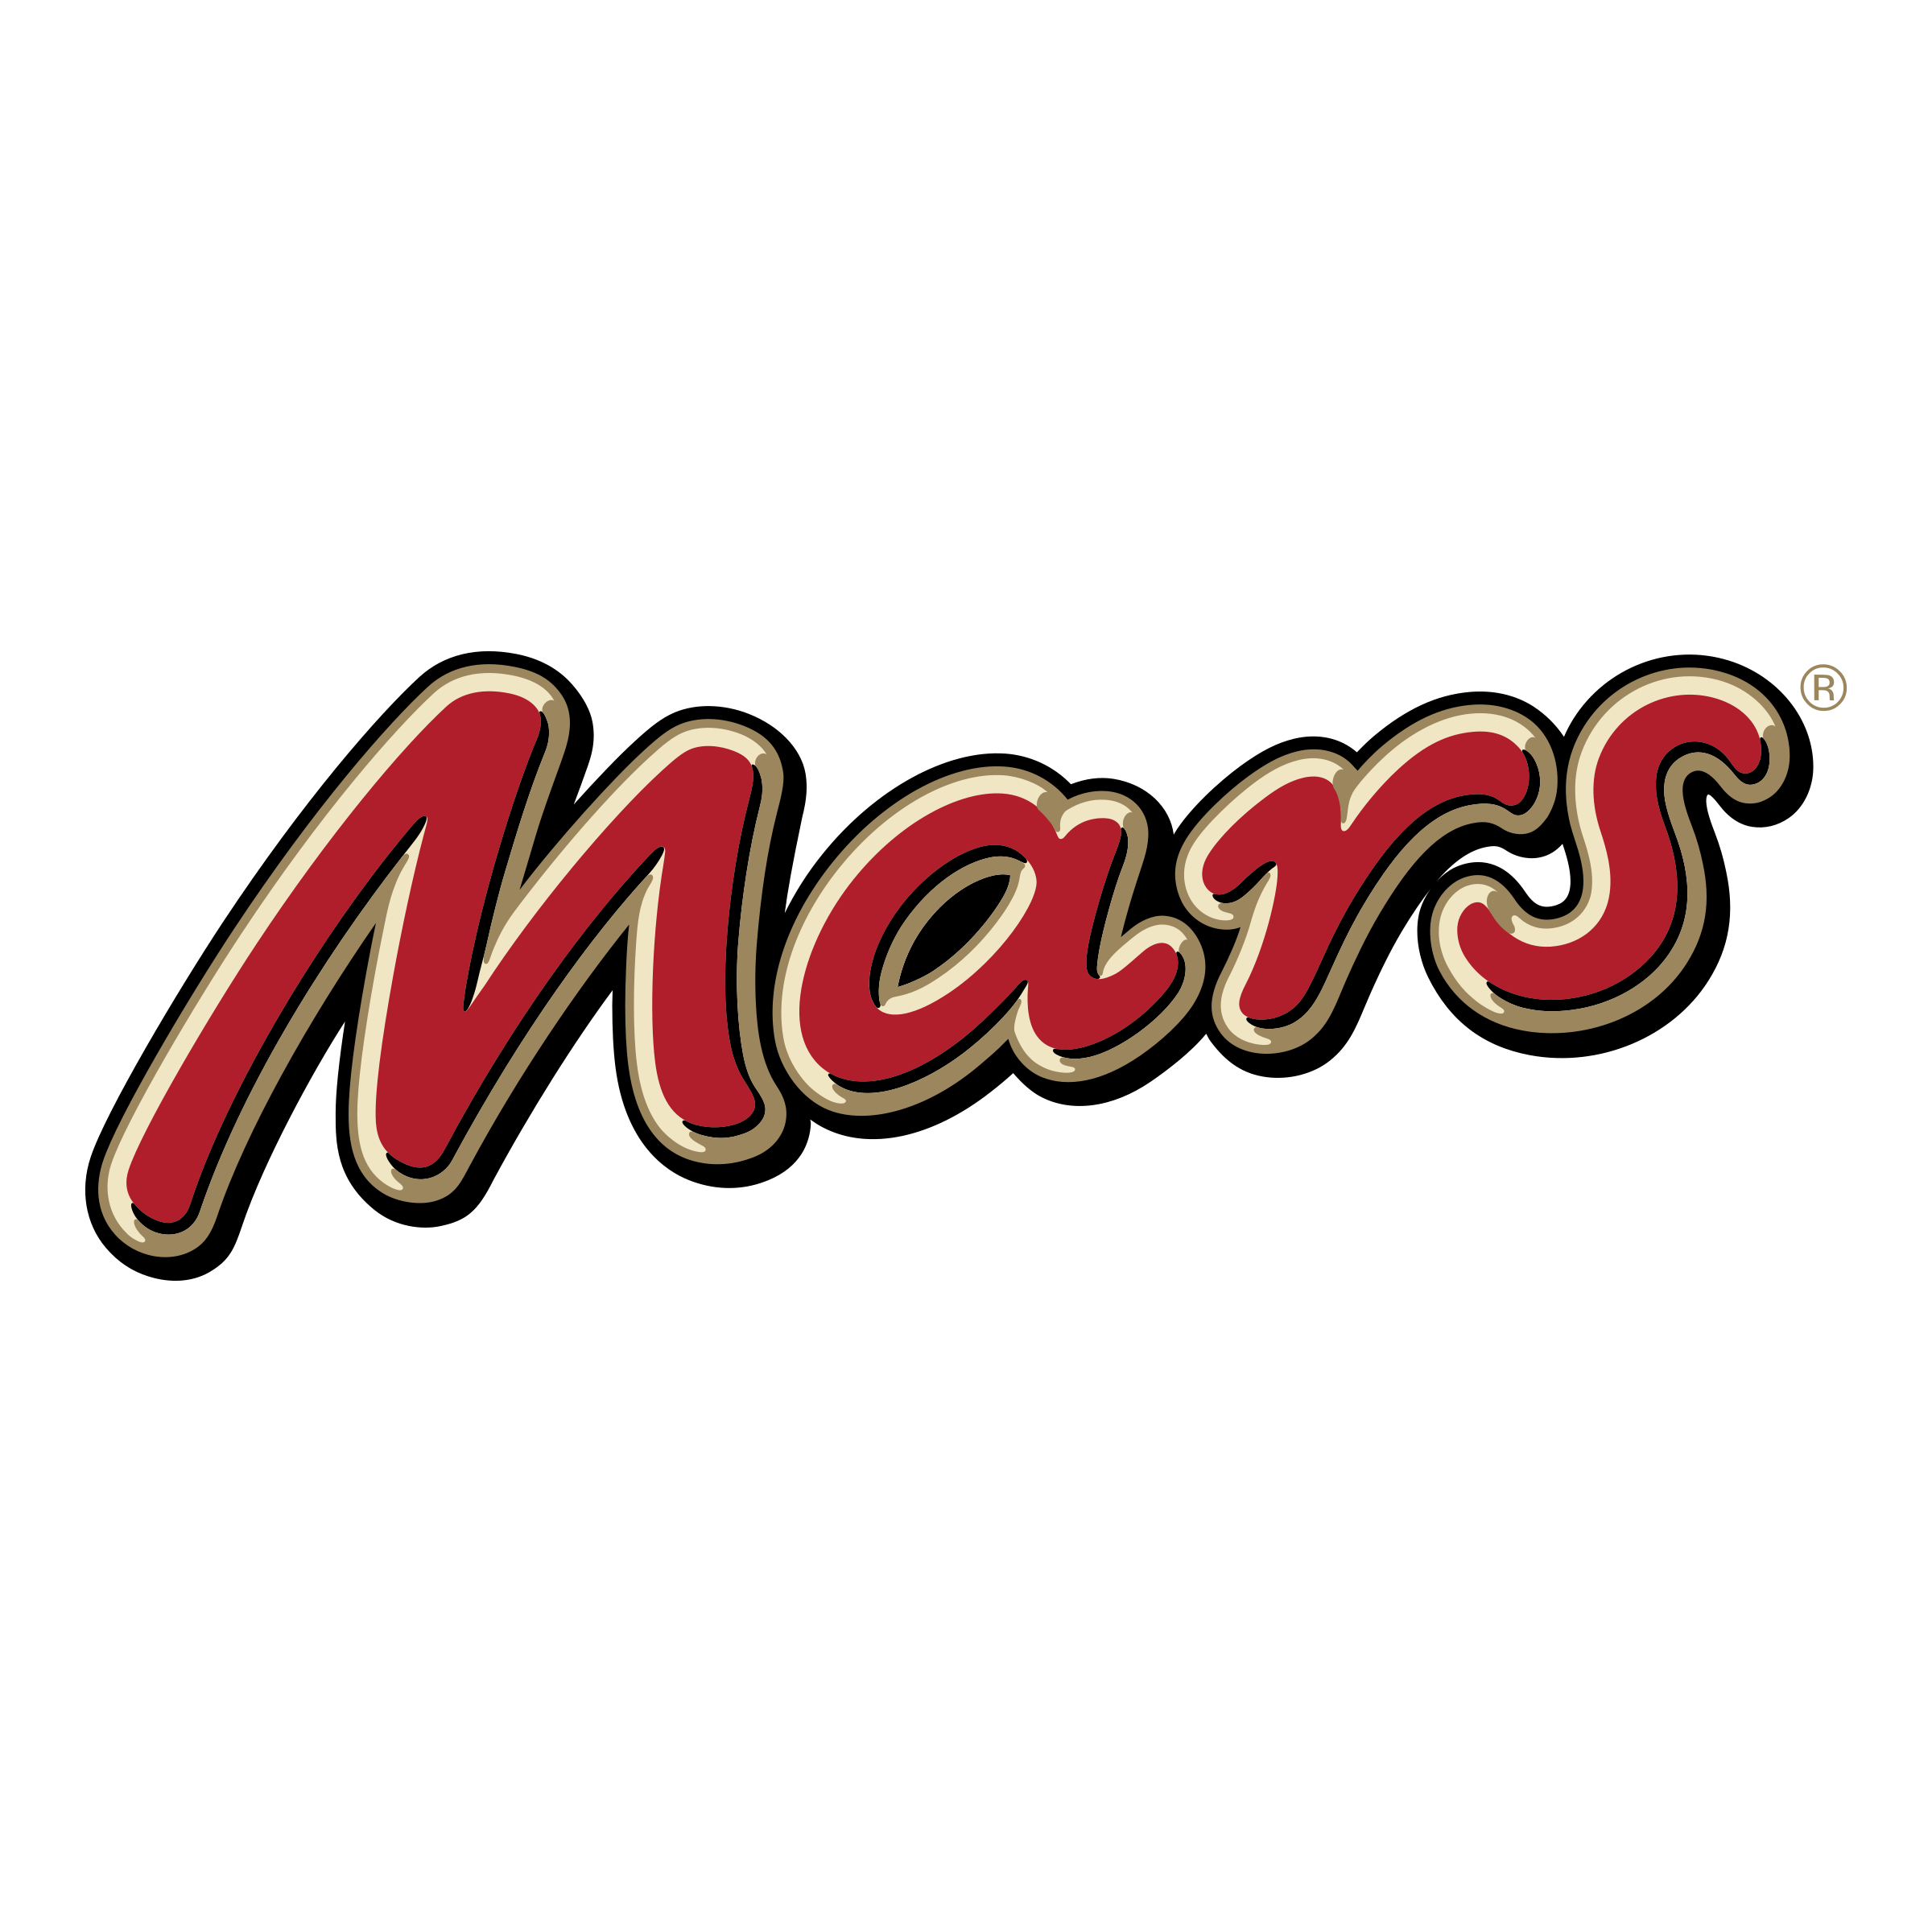 Mars Logo - Mars Logo PNG Transparent & SVG Vector